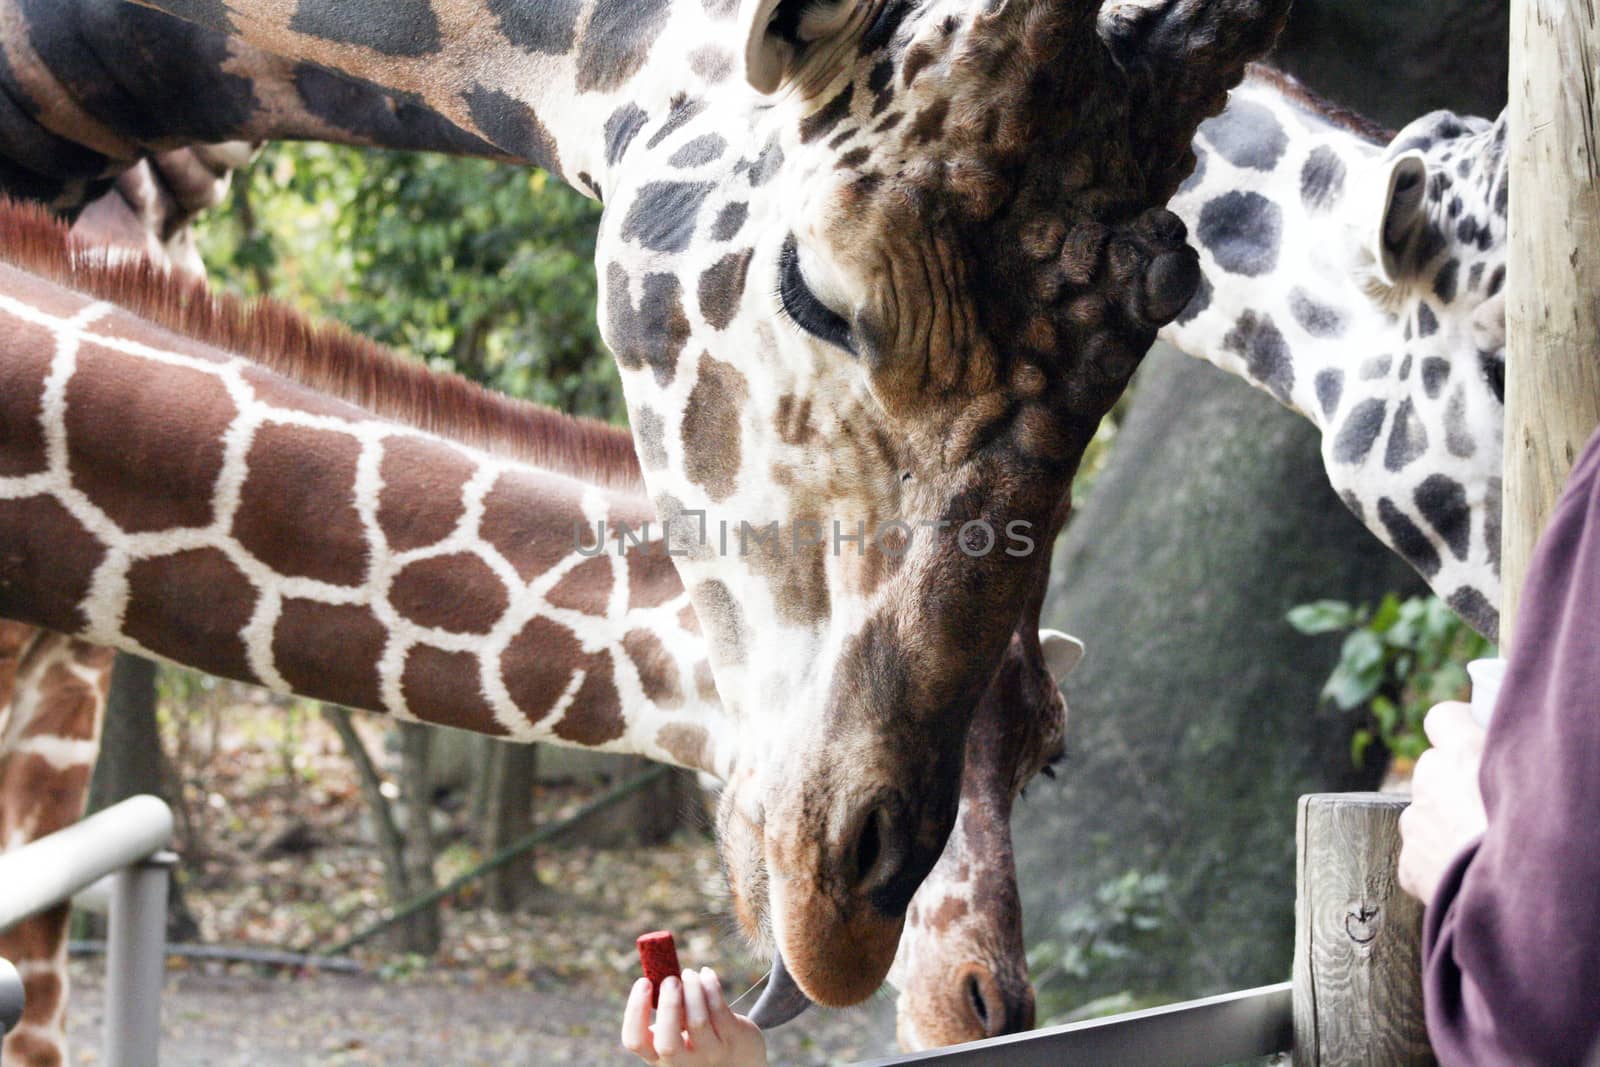 Giraffe Feeding at a Zoo by tornado98